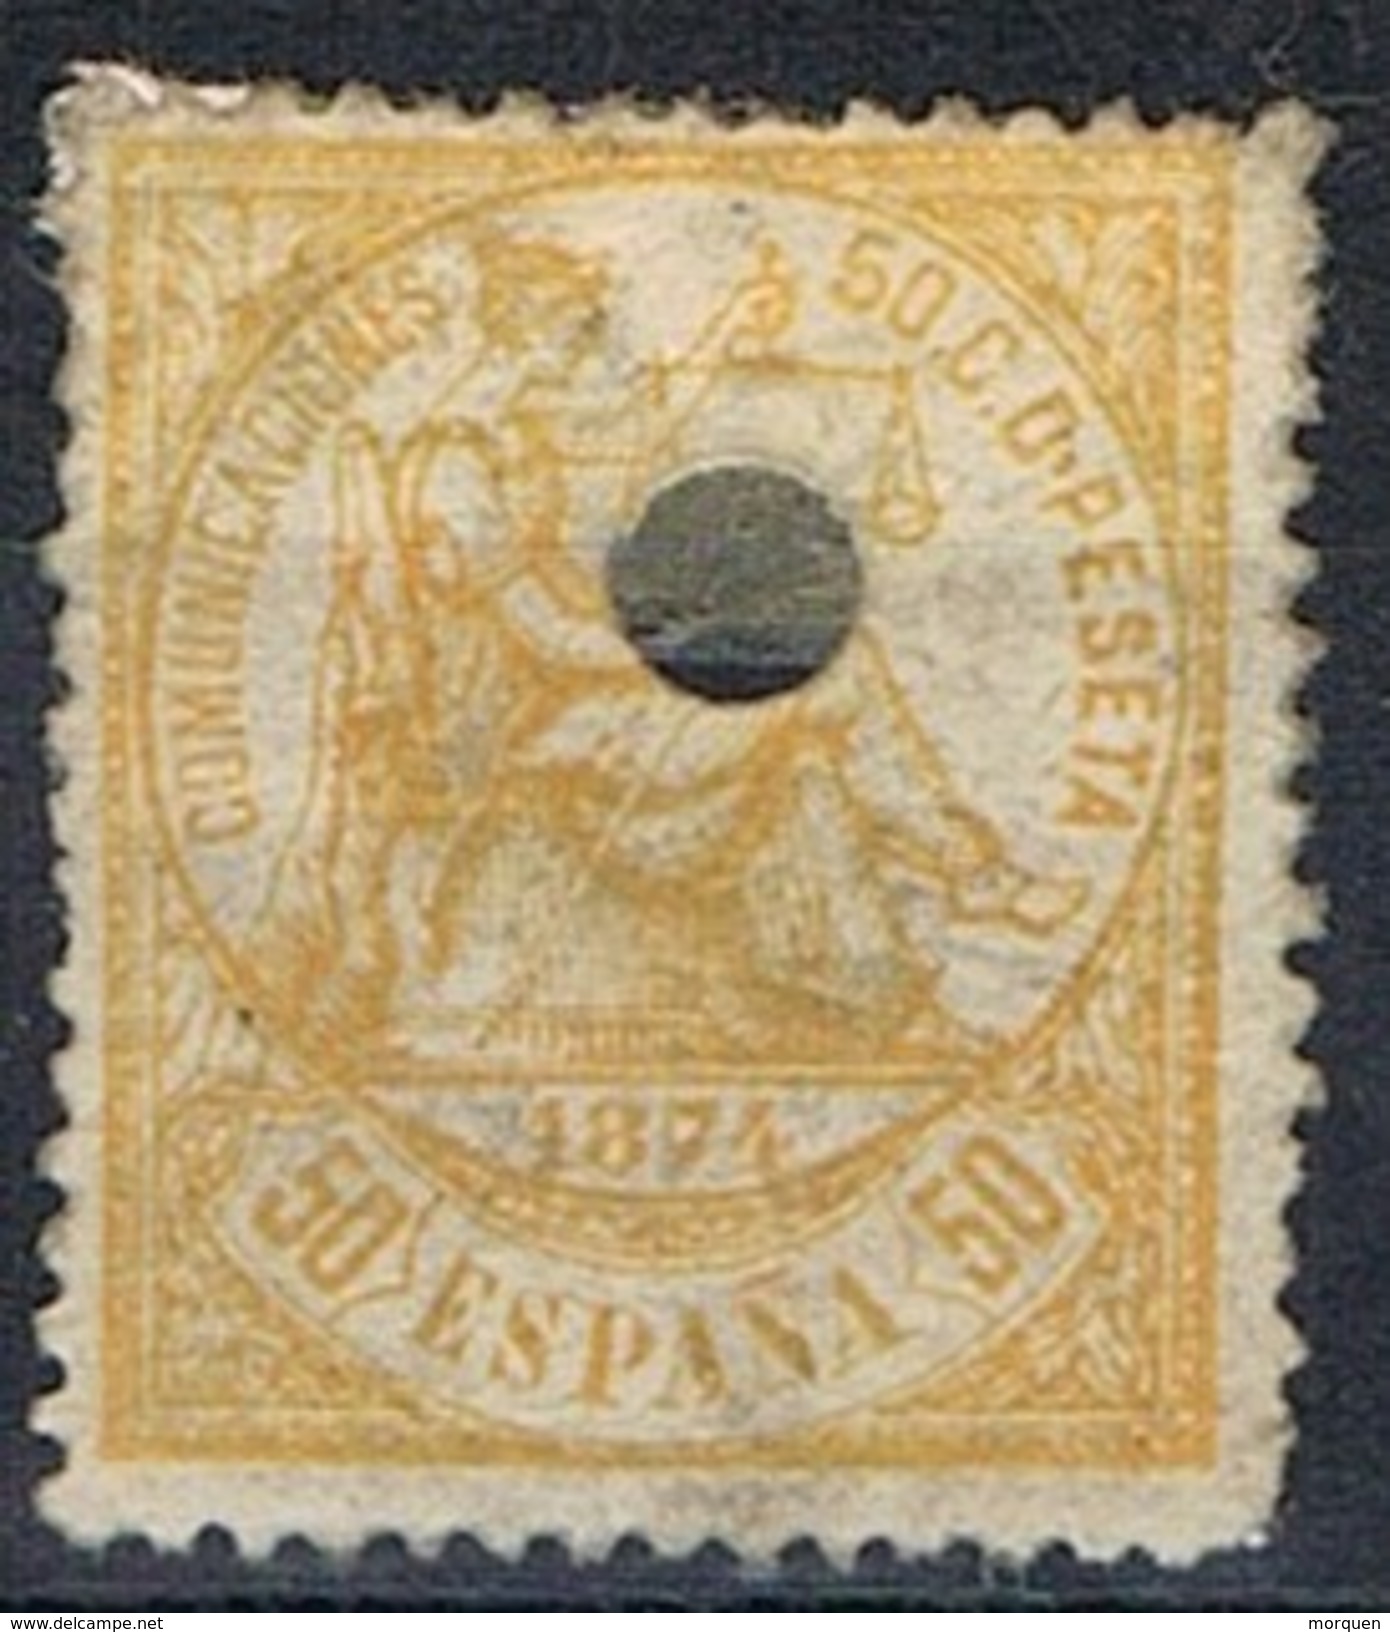 Sello 50 Pts Alegoria Justicia 1874, Perforado Telegrafico, Edifil Num 149T º - Used Stamps